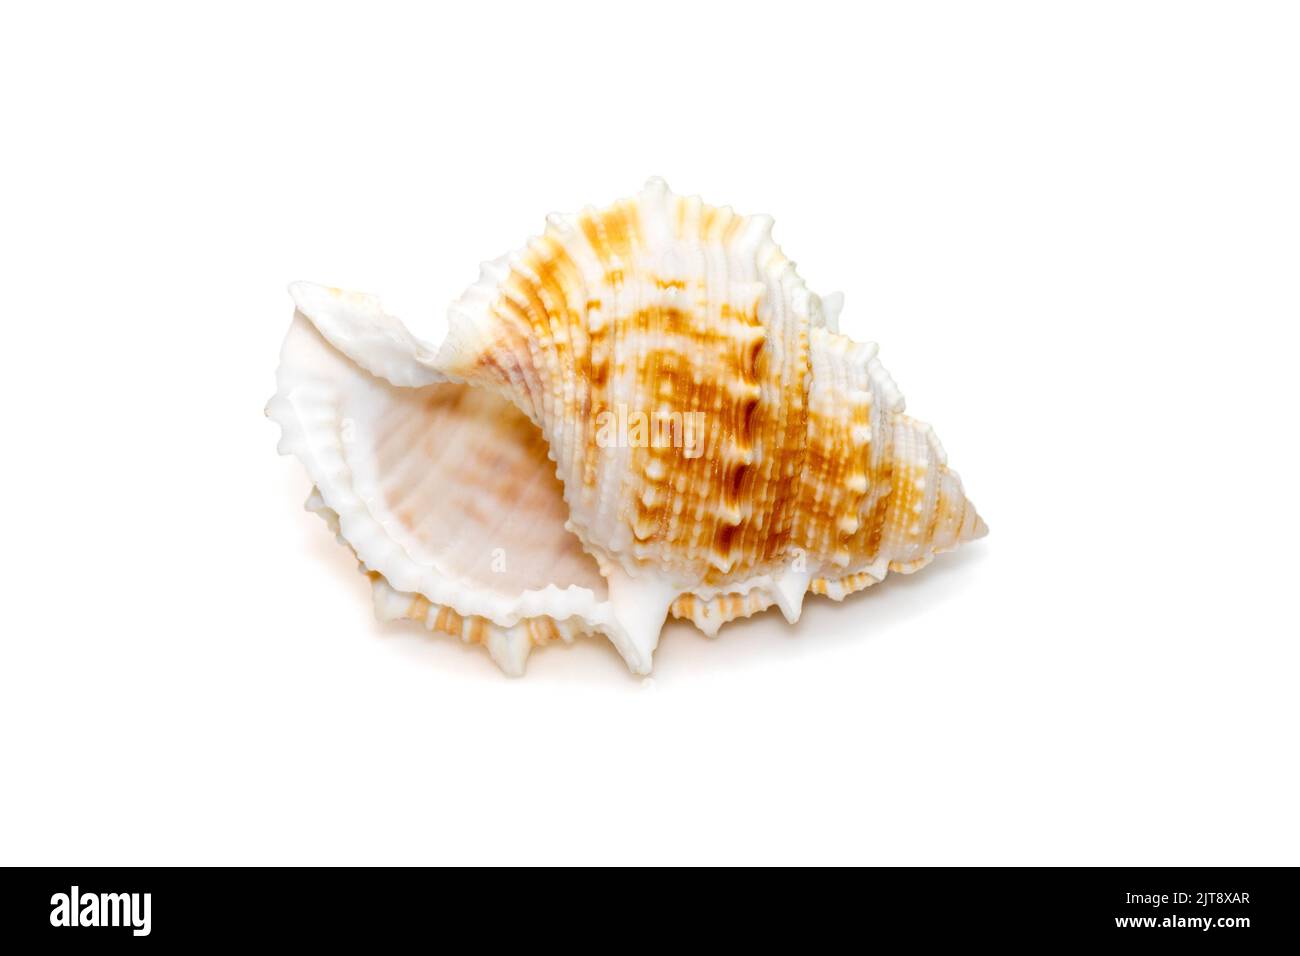 Image de bufonaria le coquillage de rana est une espèce d'escargot de mer, un mollusque de gastropodes marin de la famille des Bursidae, les coquilles de grenouilles isolées sur le dos blanc Banque D'Images